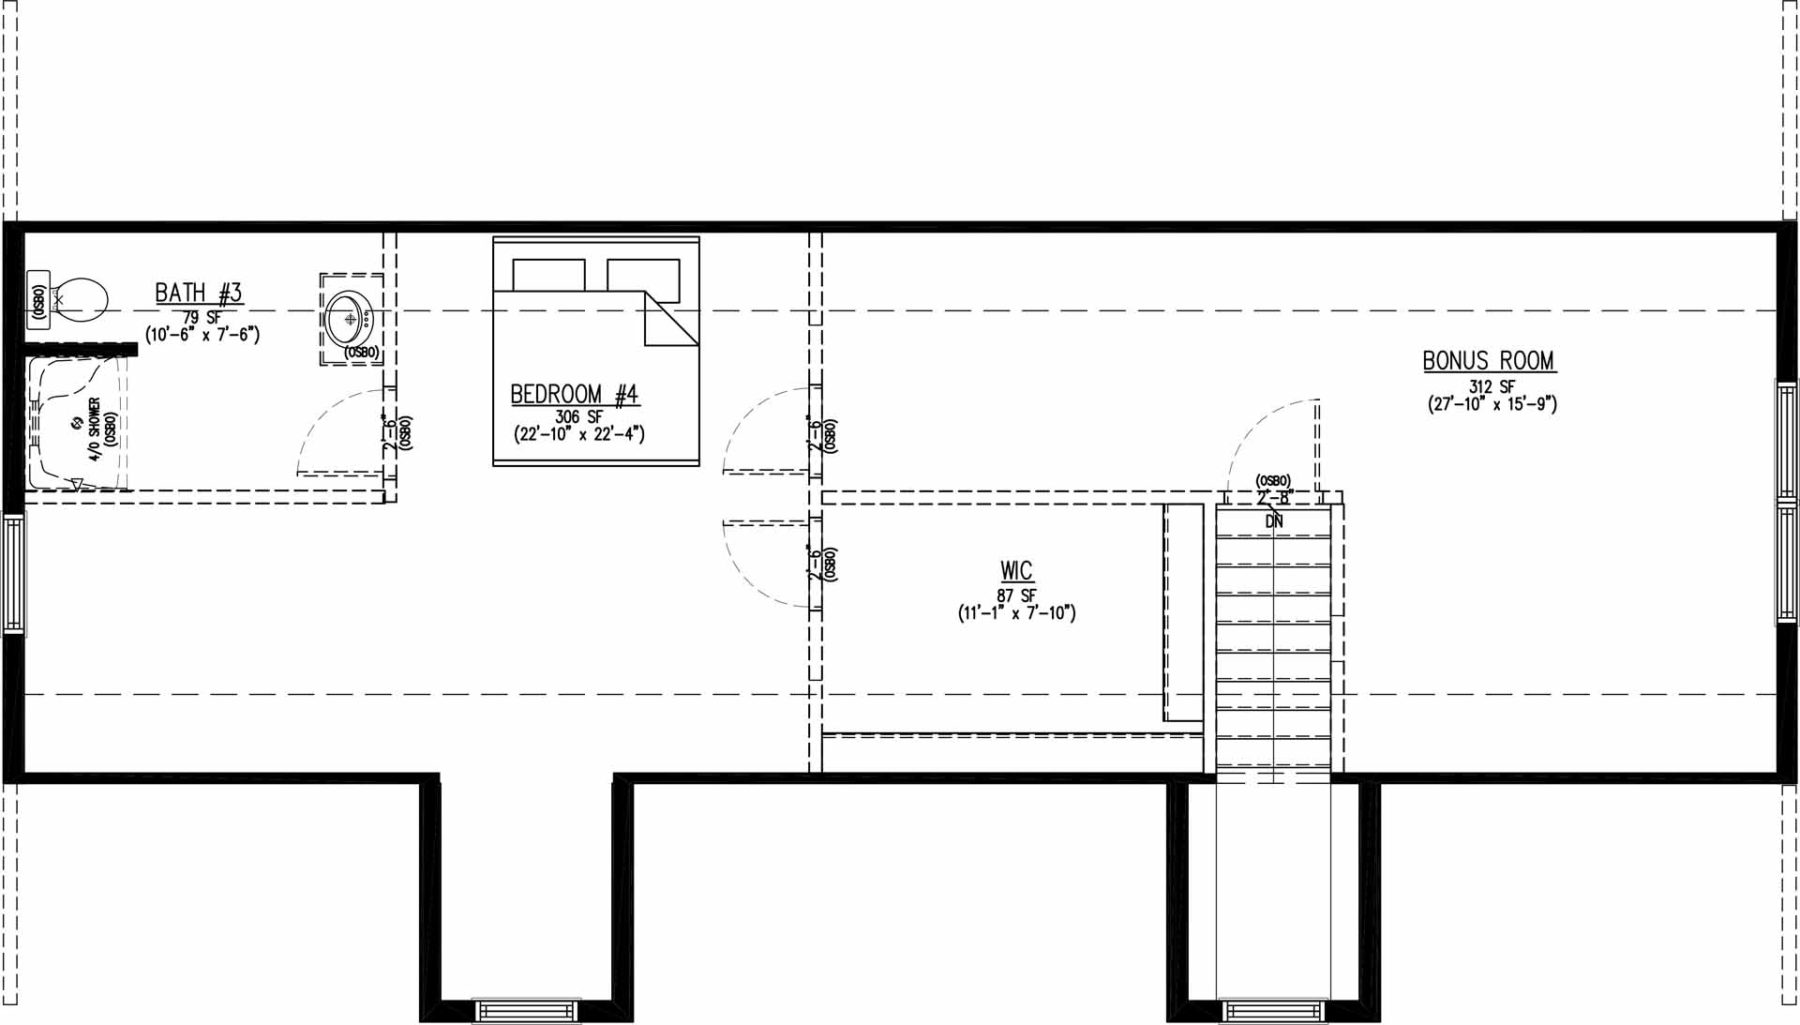 Northstar Systembuilt Liberty Model 2nd Story Floor Plan